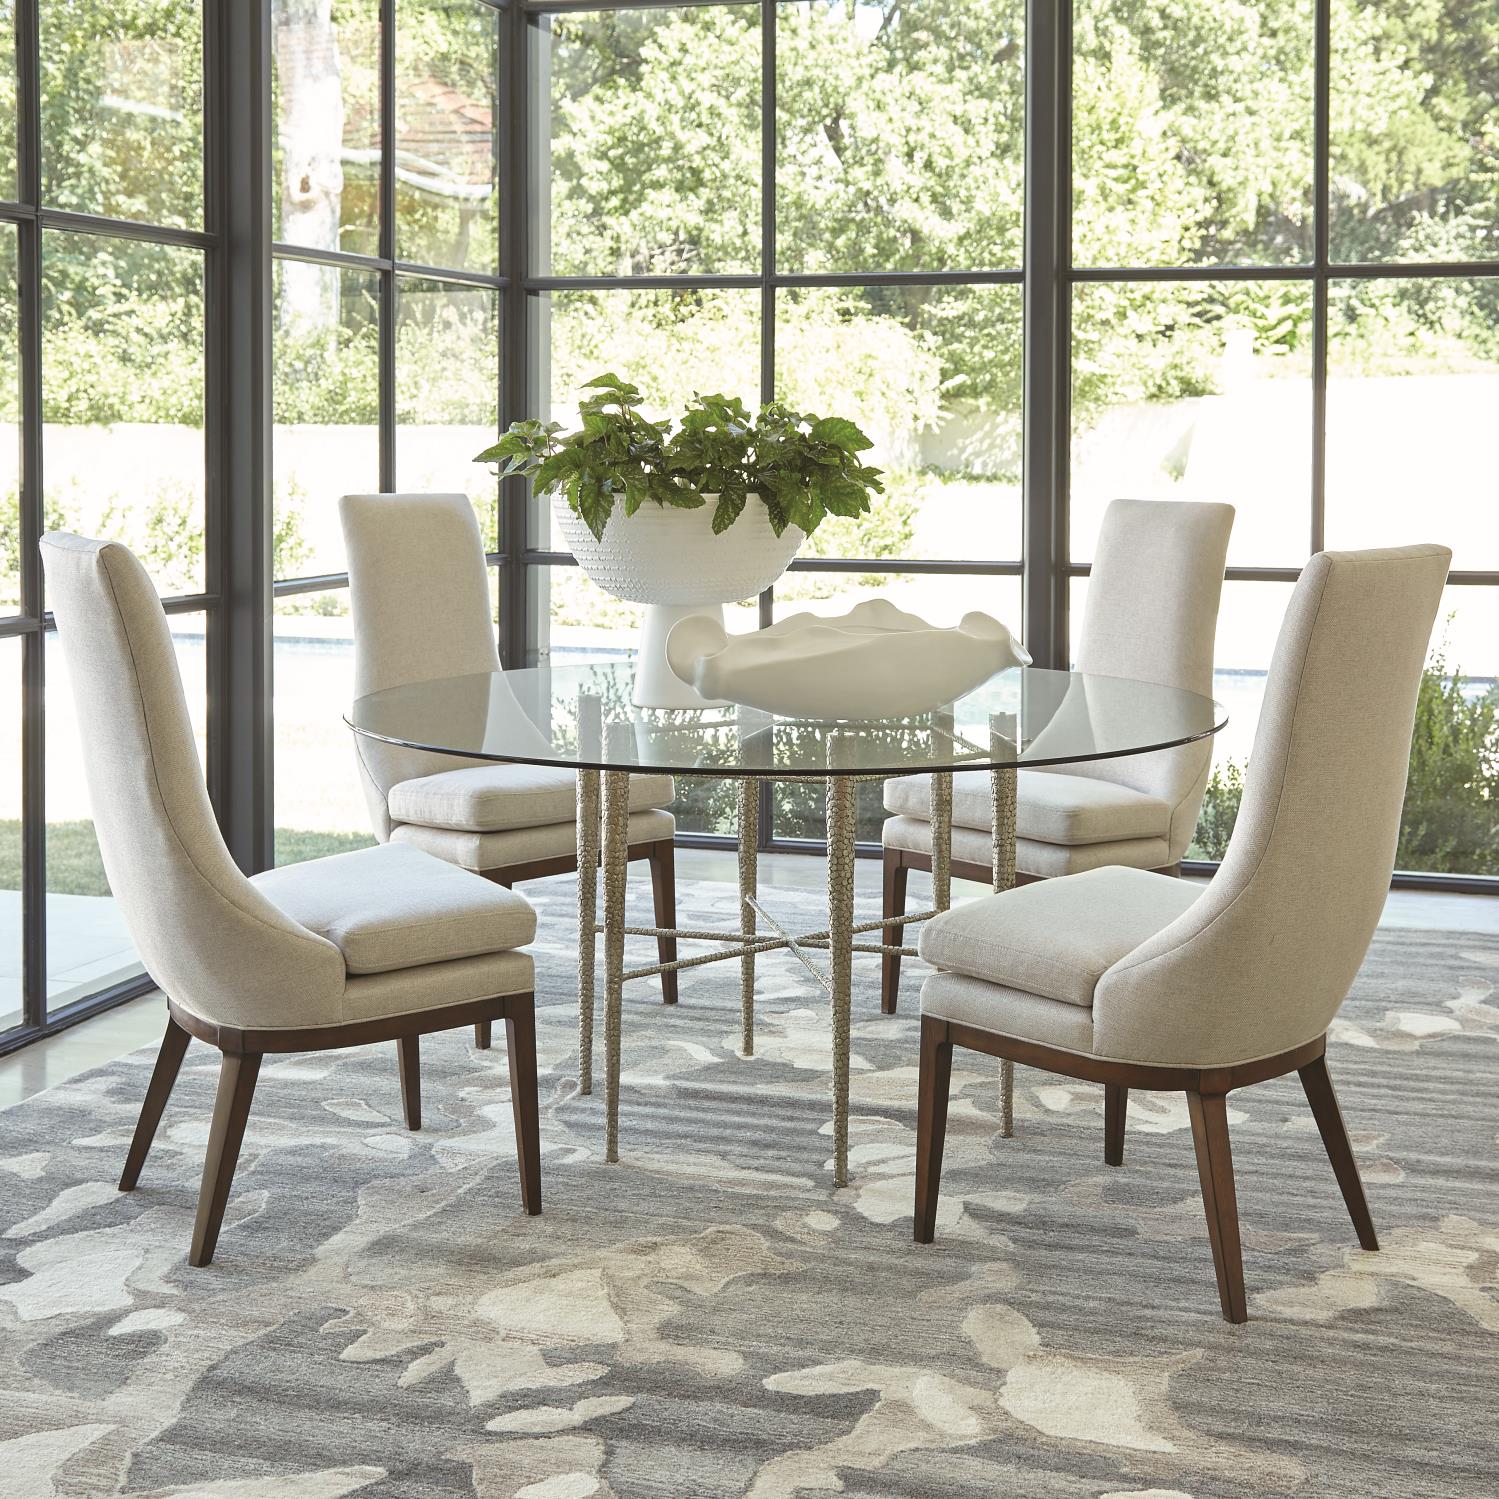 Hammered Dining Table - Nickel Plated - Grats Decor Interior Design & Build Inc.